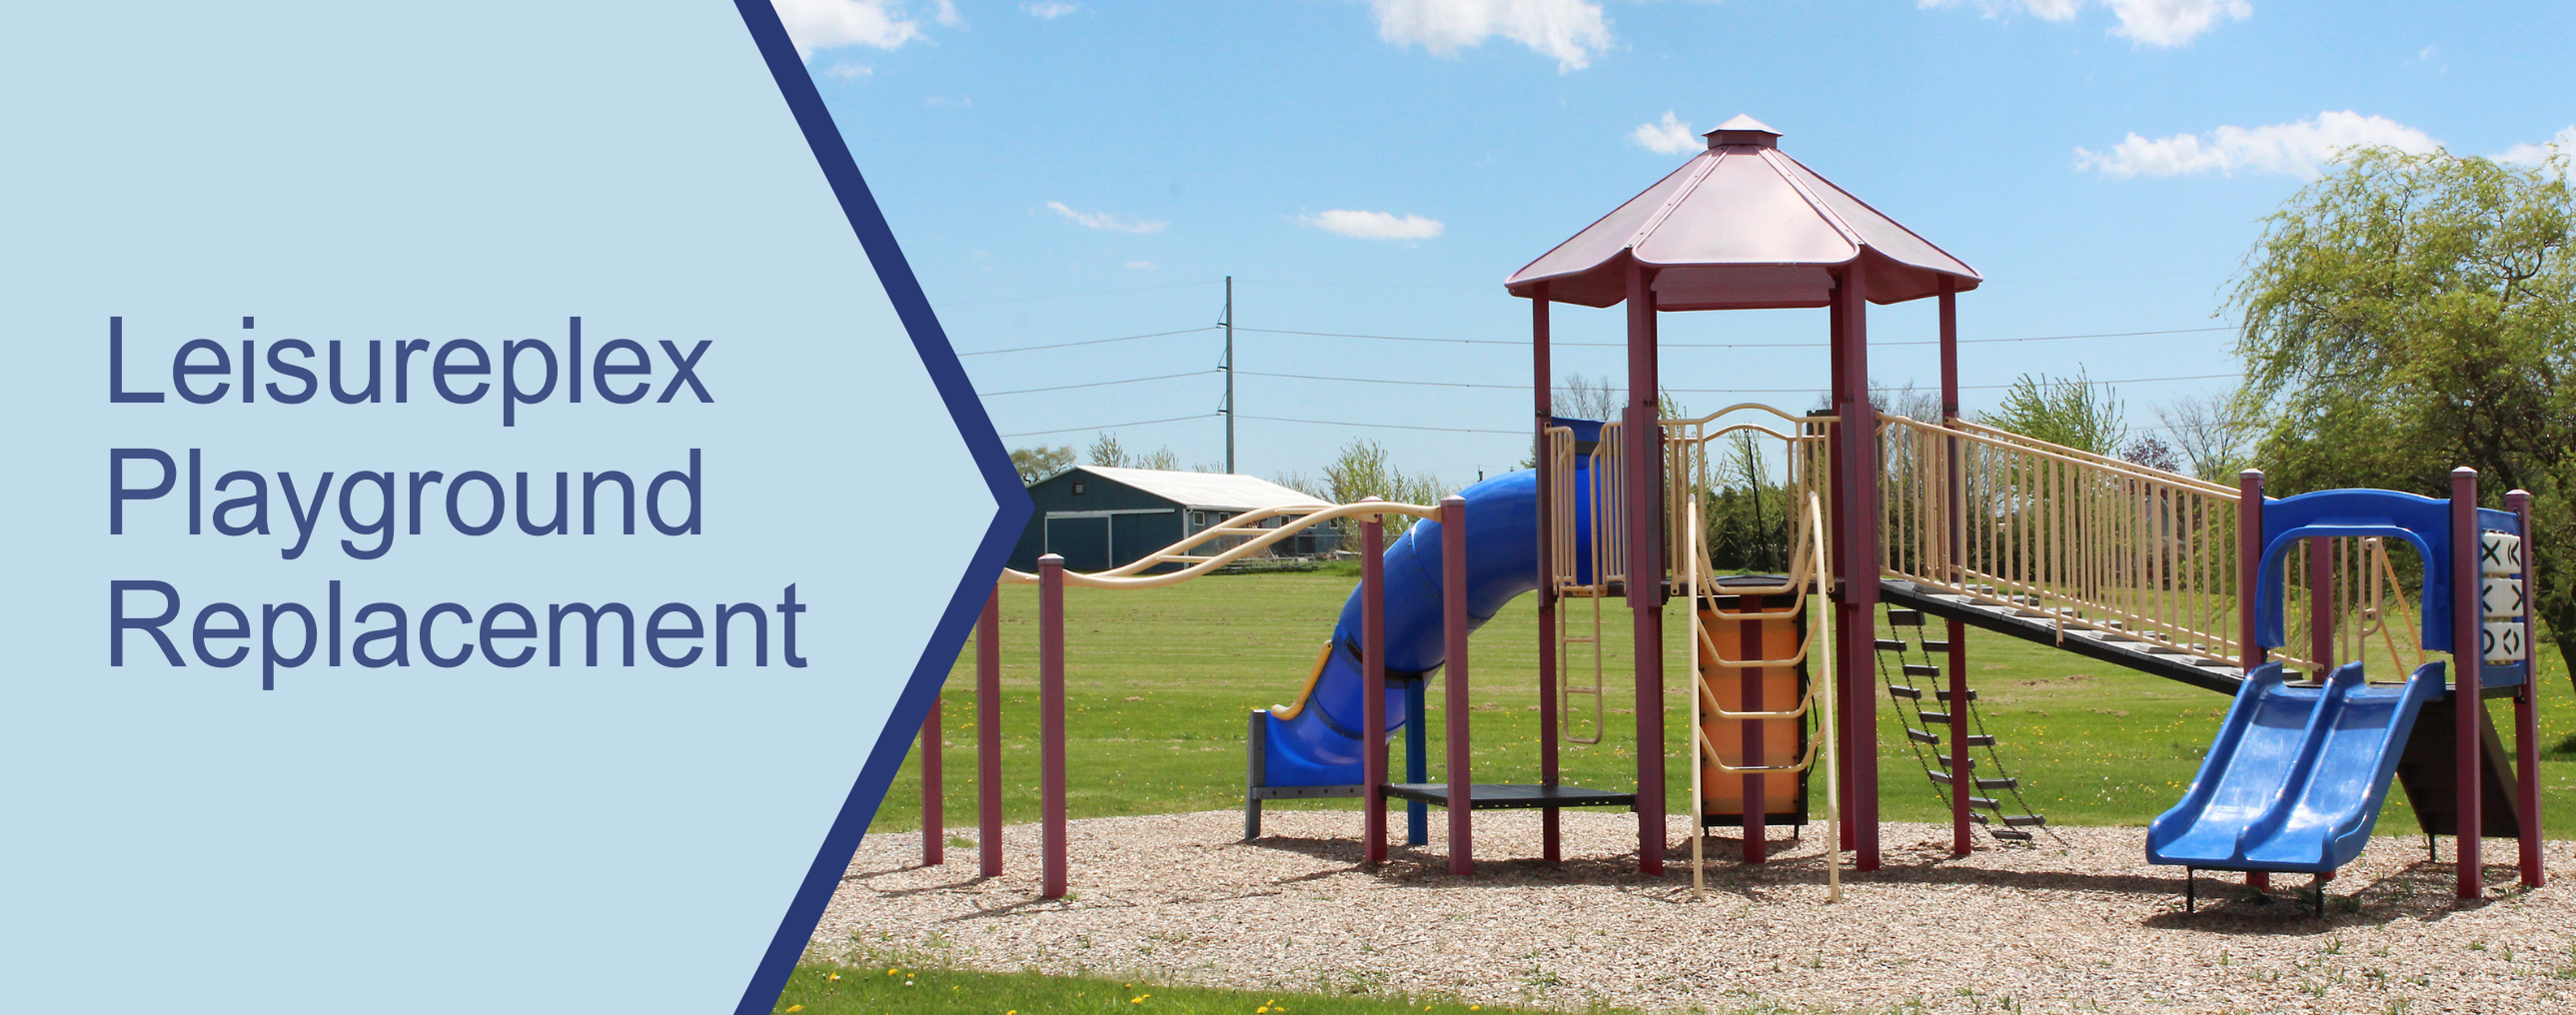 Photo of playground located within Leisureplex Township Park wtih text that says Leisureplex Playground Replacement